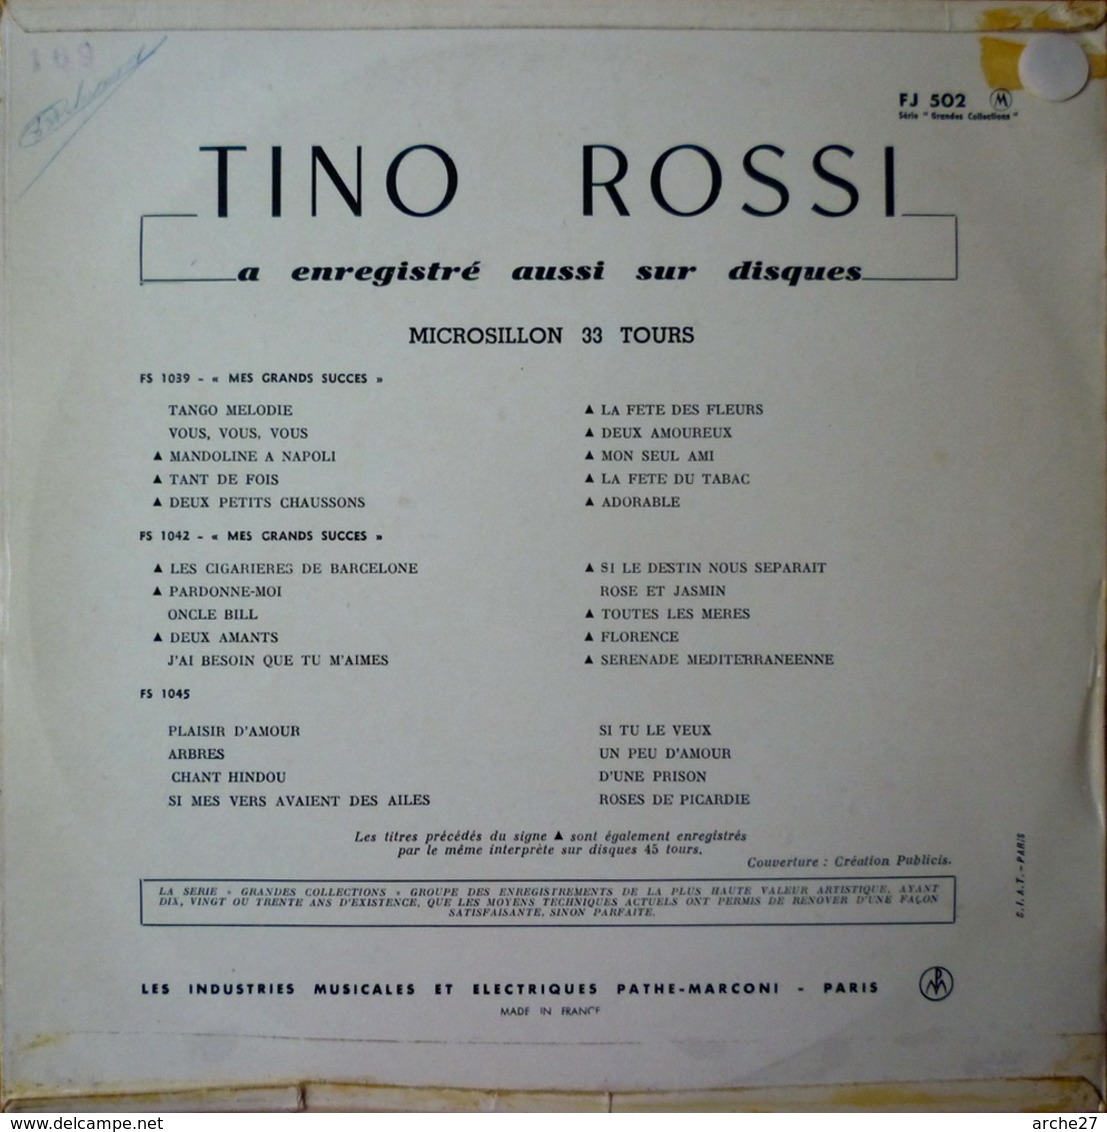 TINO ROSSI - 25 Cm - 33T - Disque Vinyle - Nuit De Noël - FJ 502 - Canzoni Di Natale